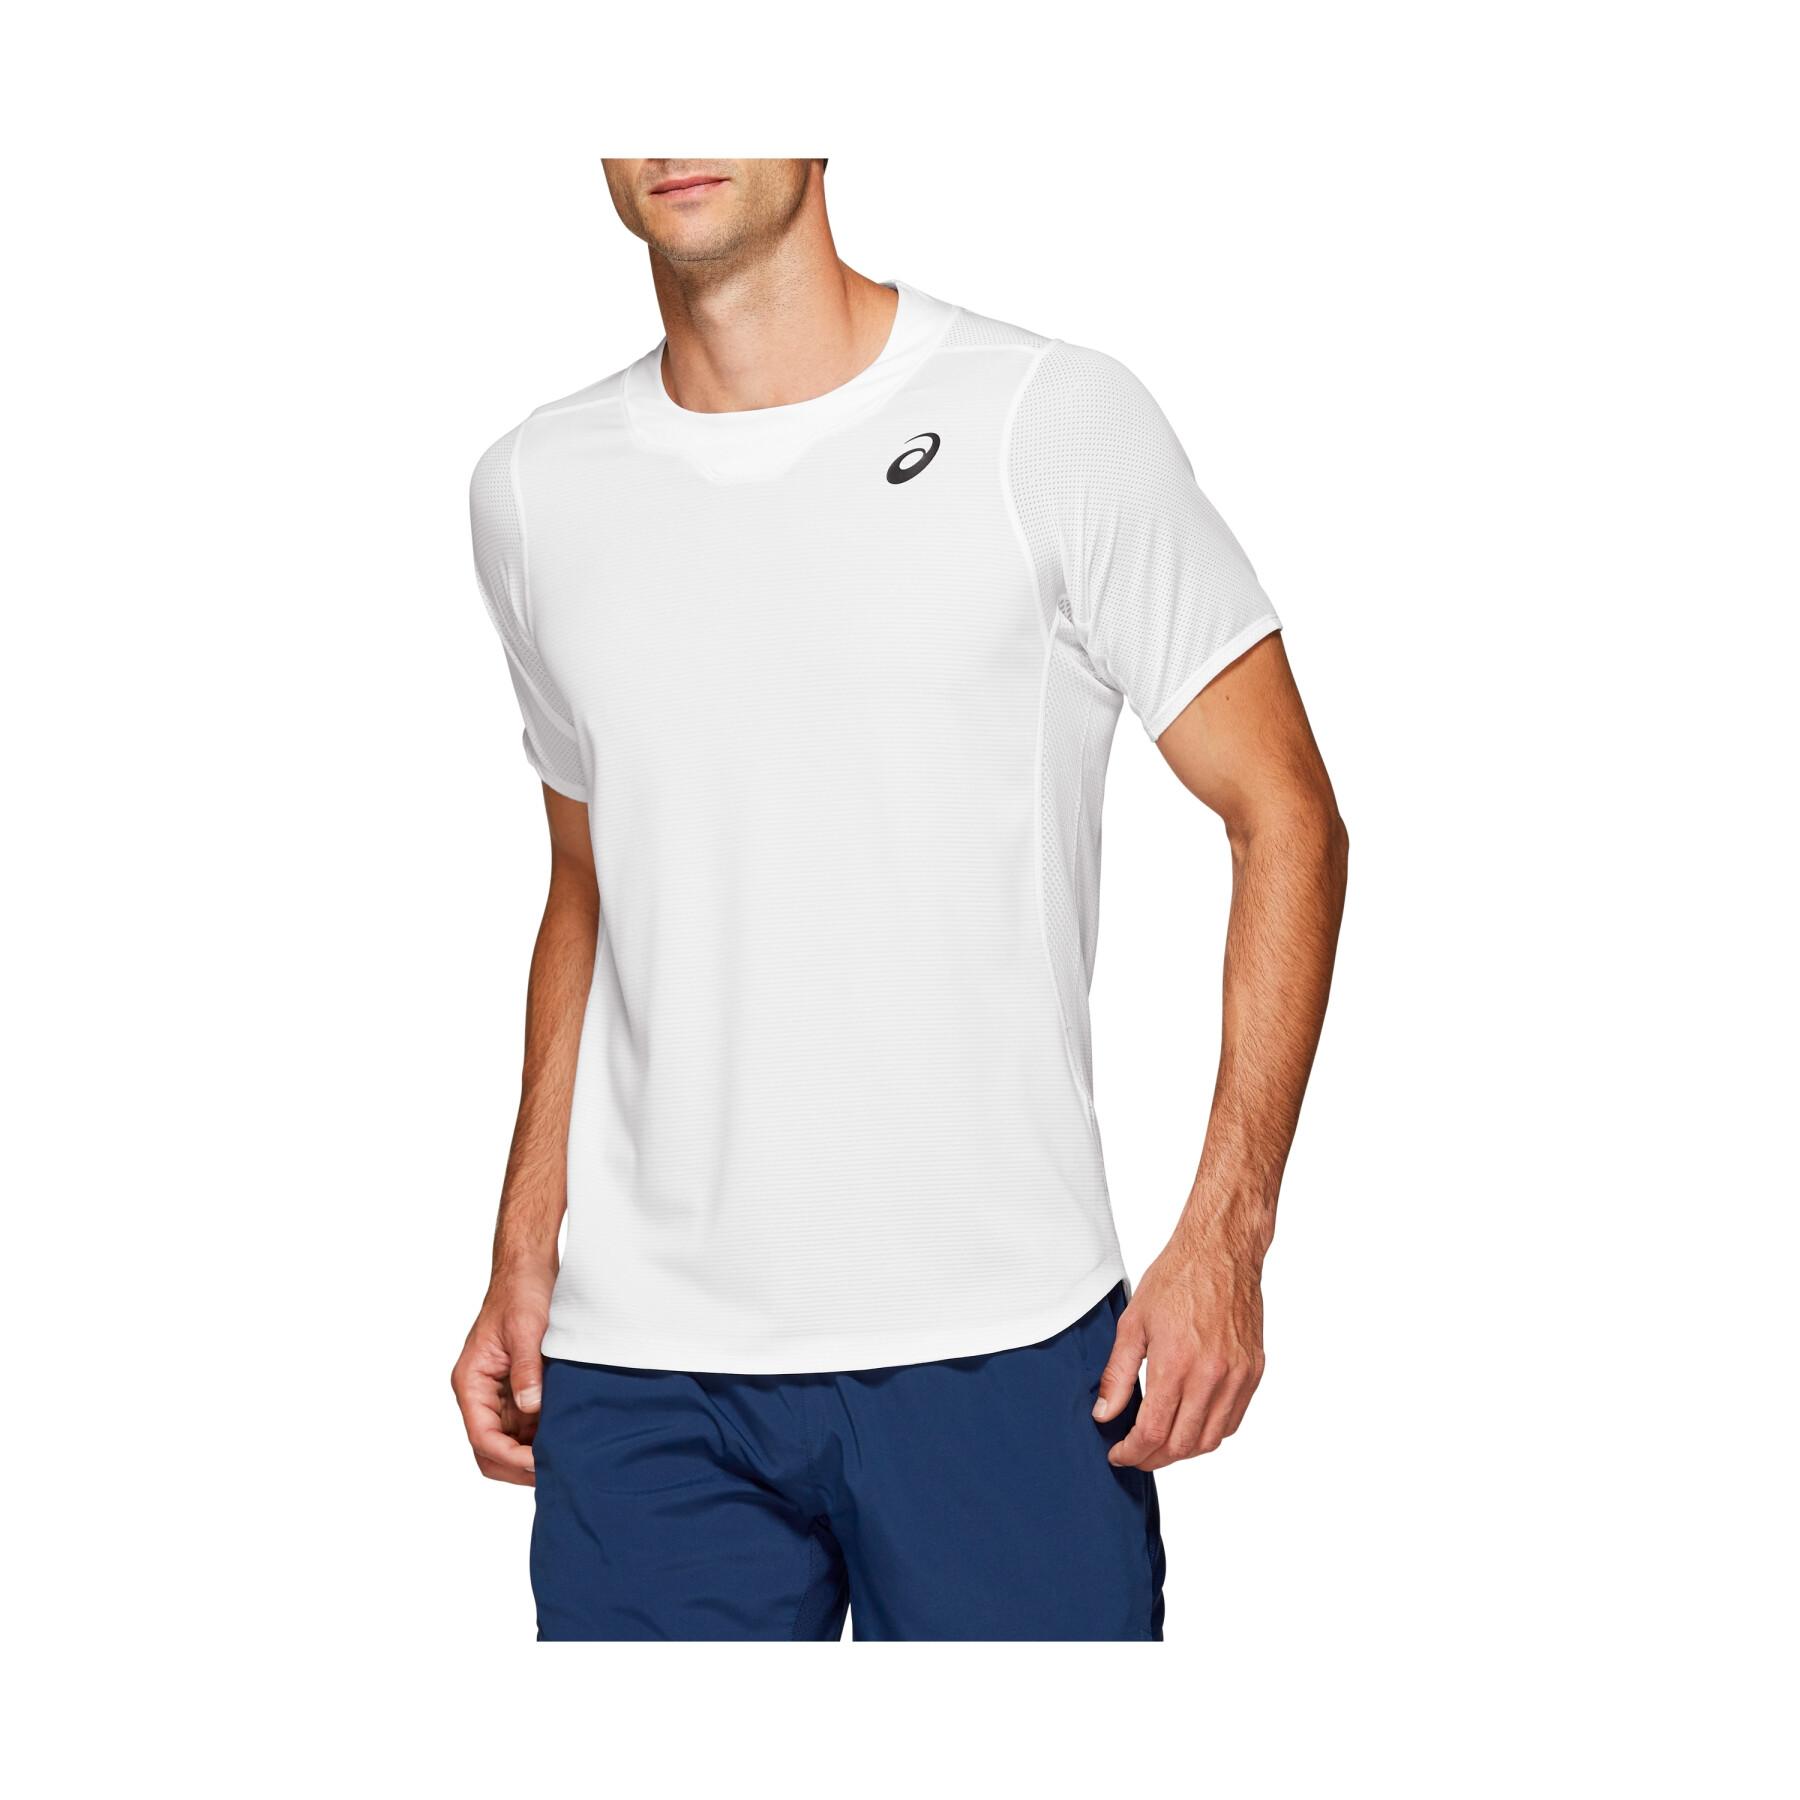 Camiseta Asics Gel Cool Top tennis